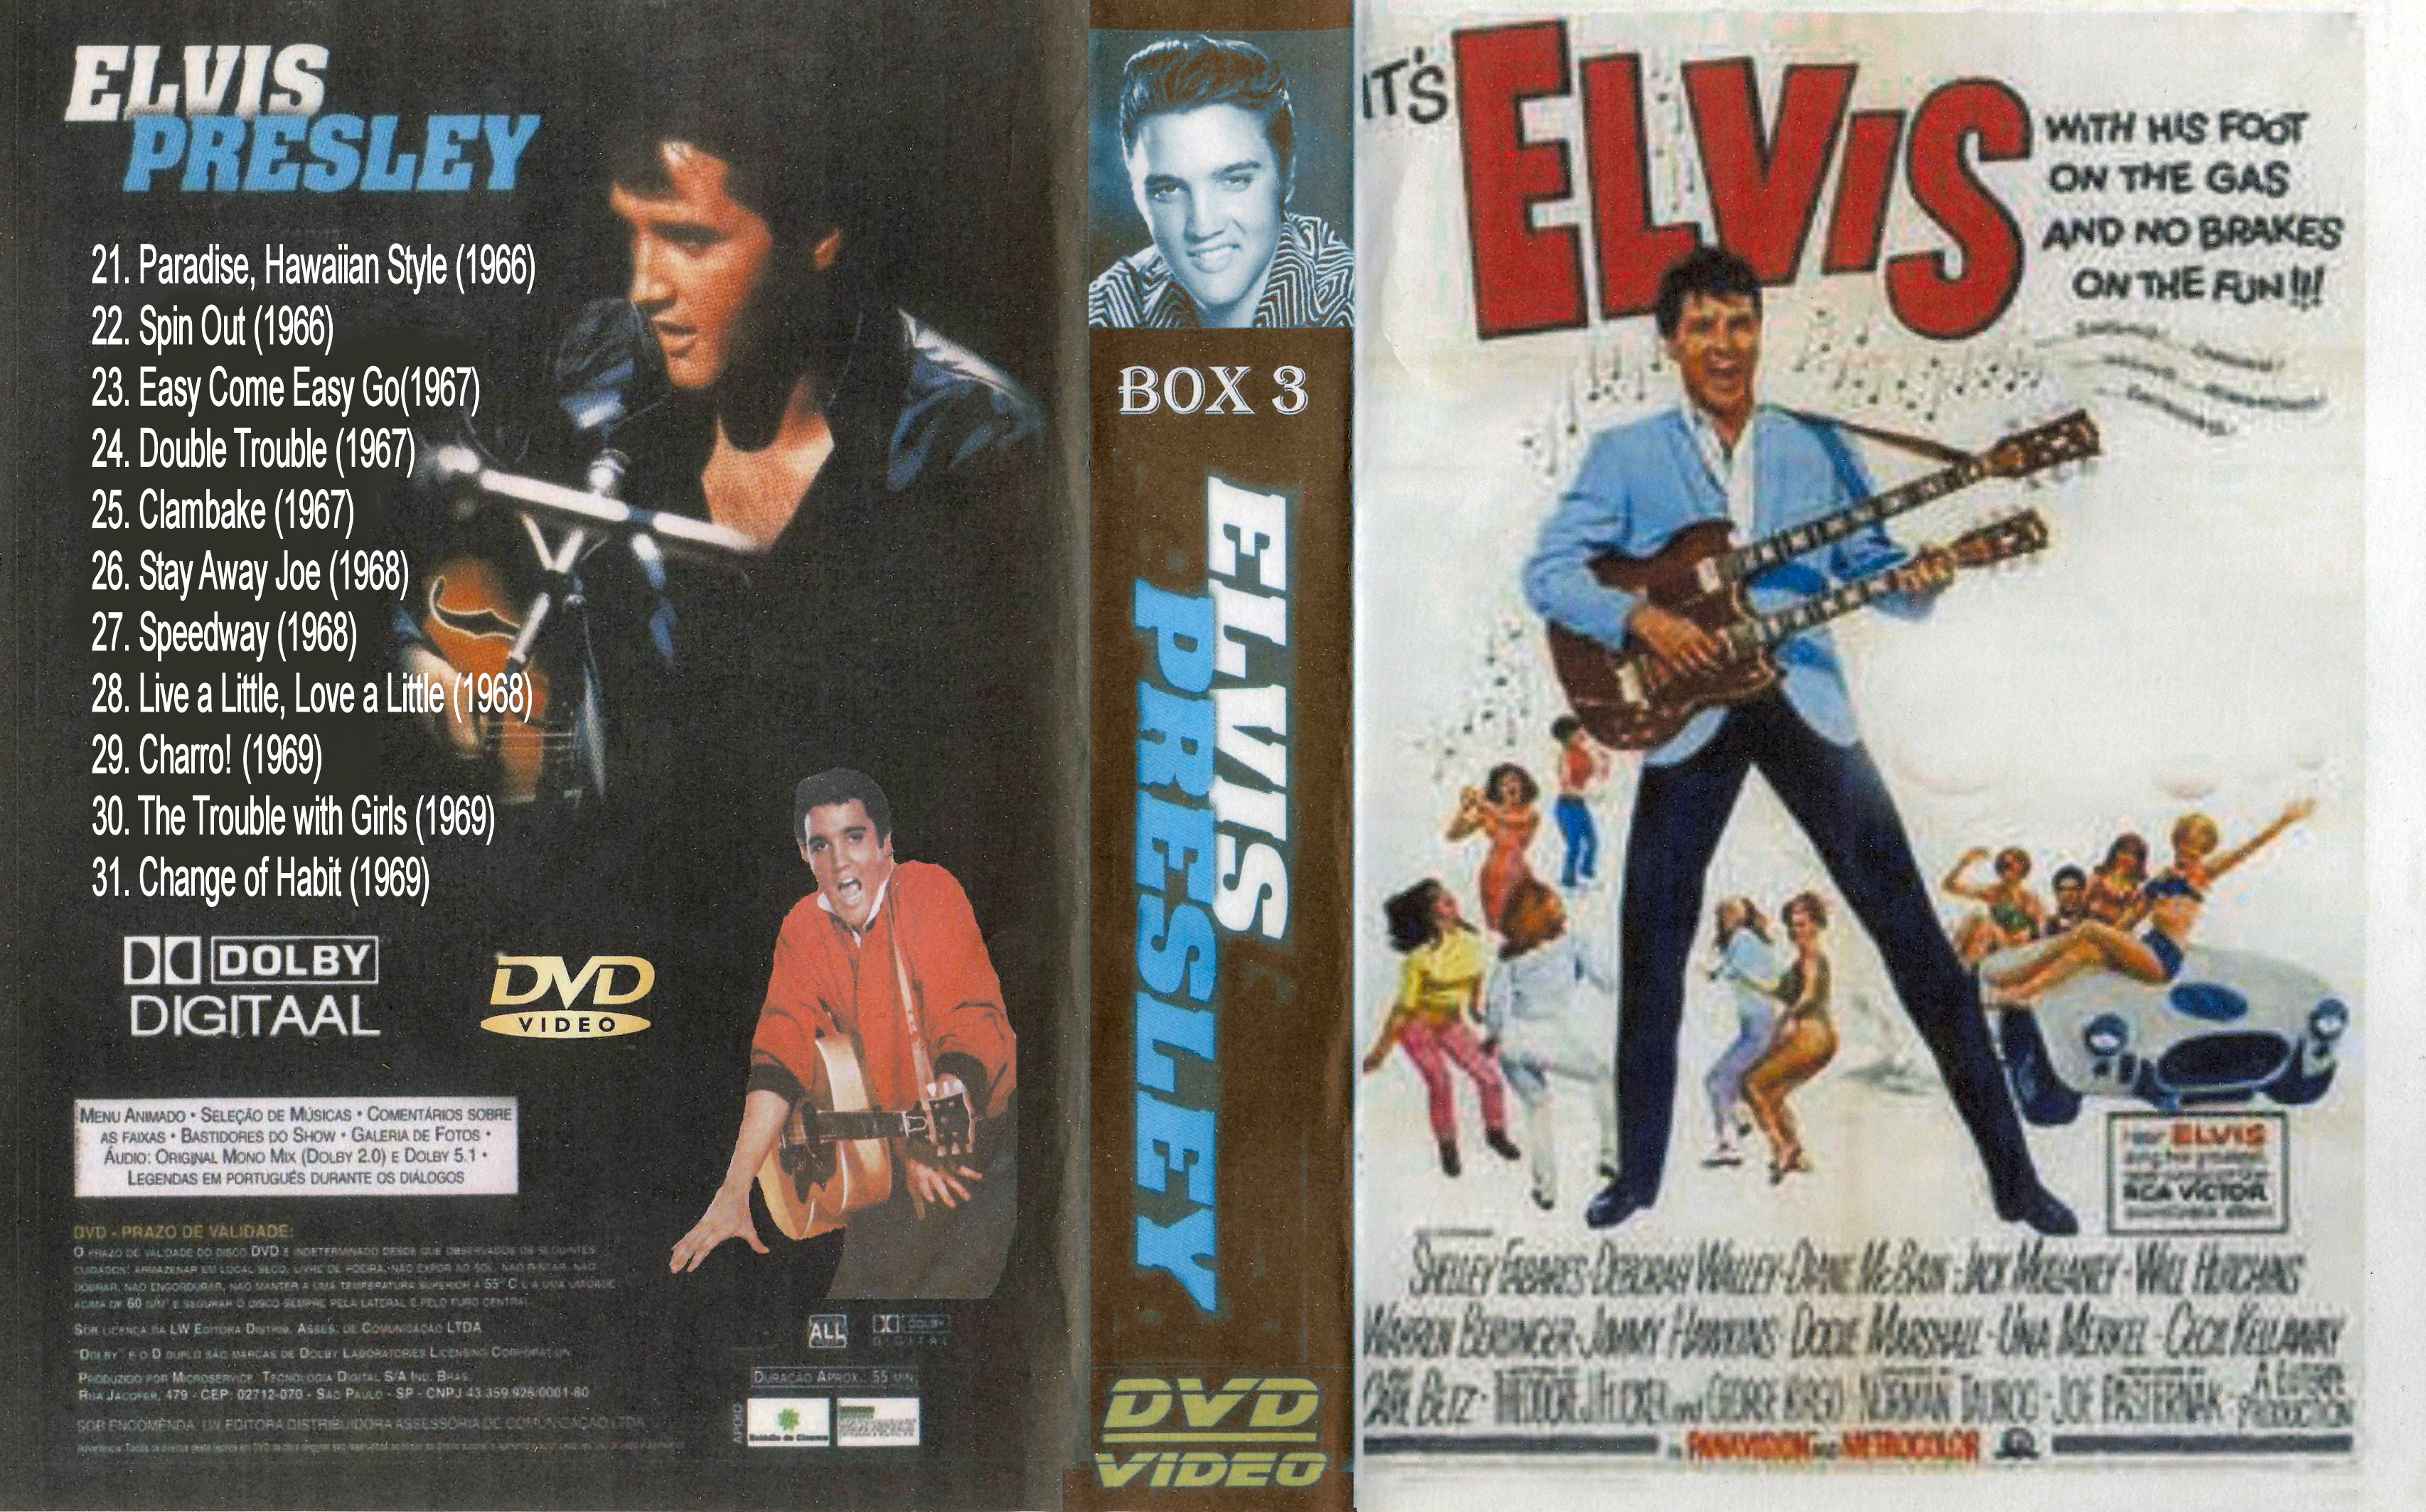 Elvis Presley Collectie ( 21. Paradise, Hawaiian Style (1966) DvD 21 van 31